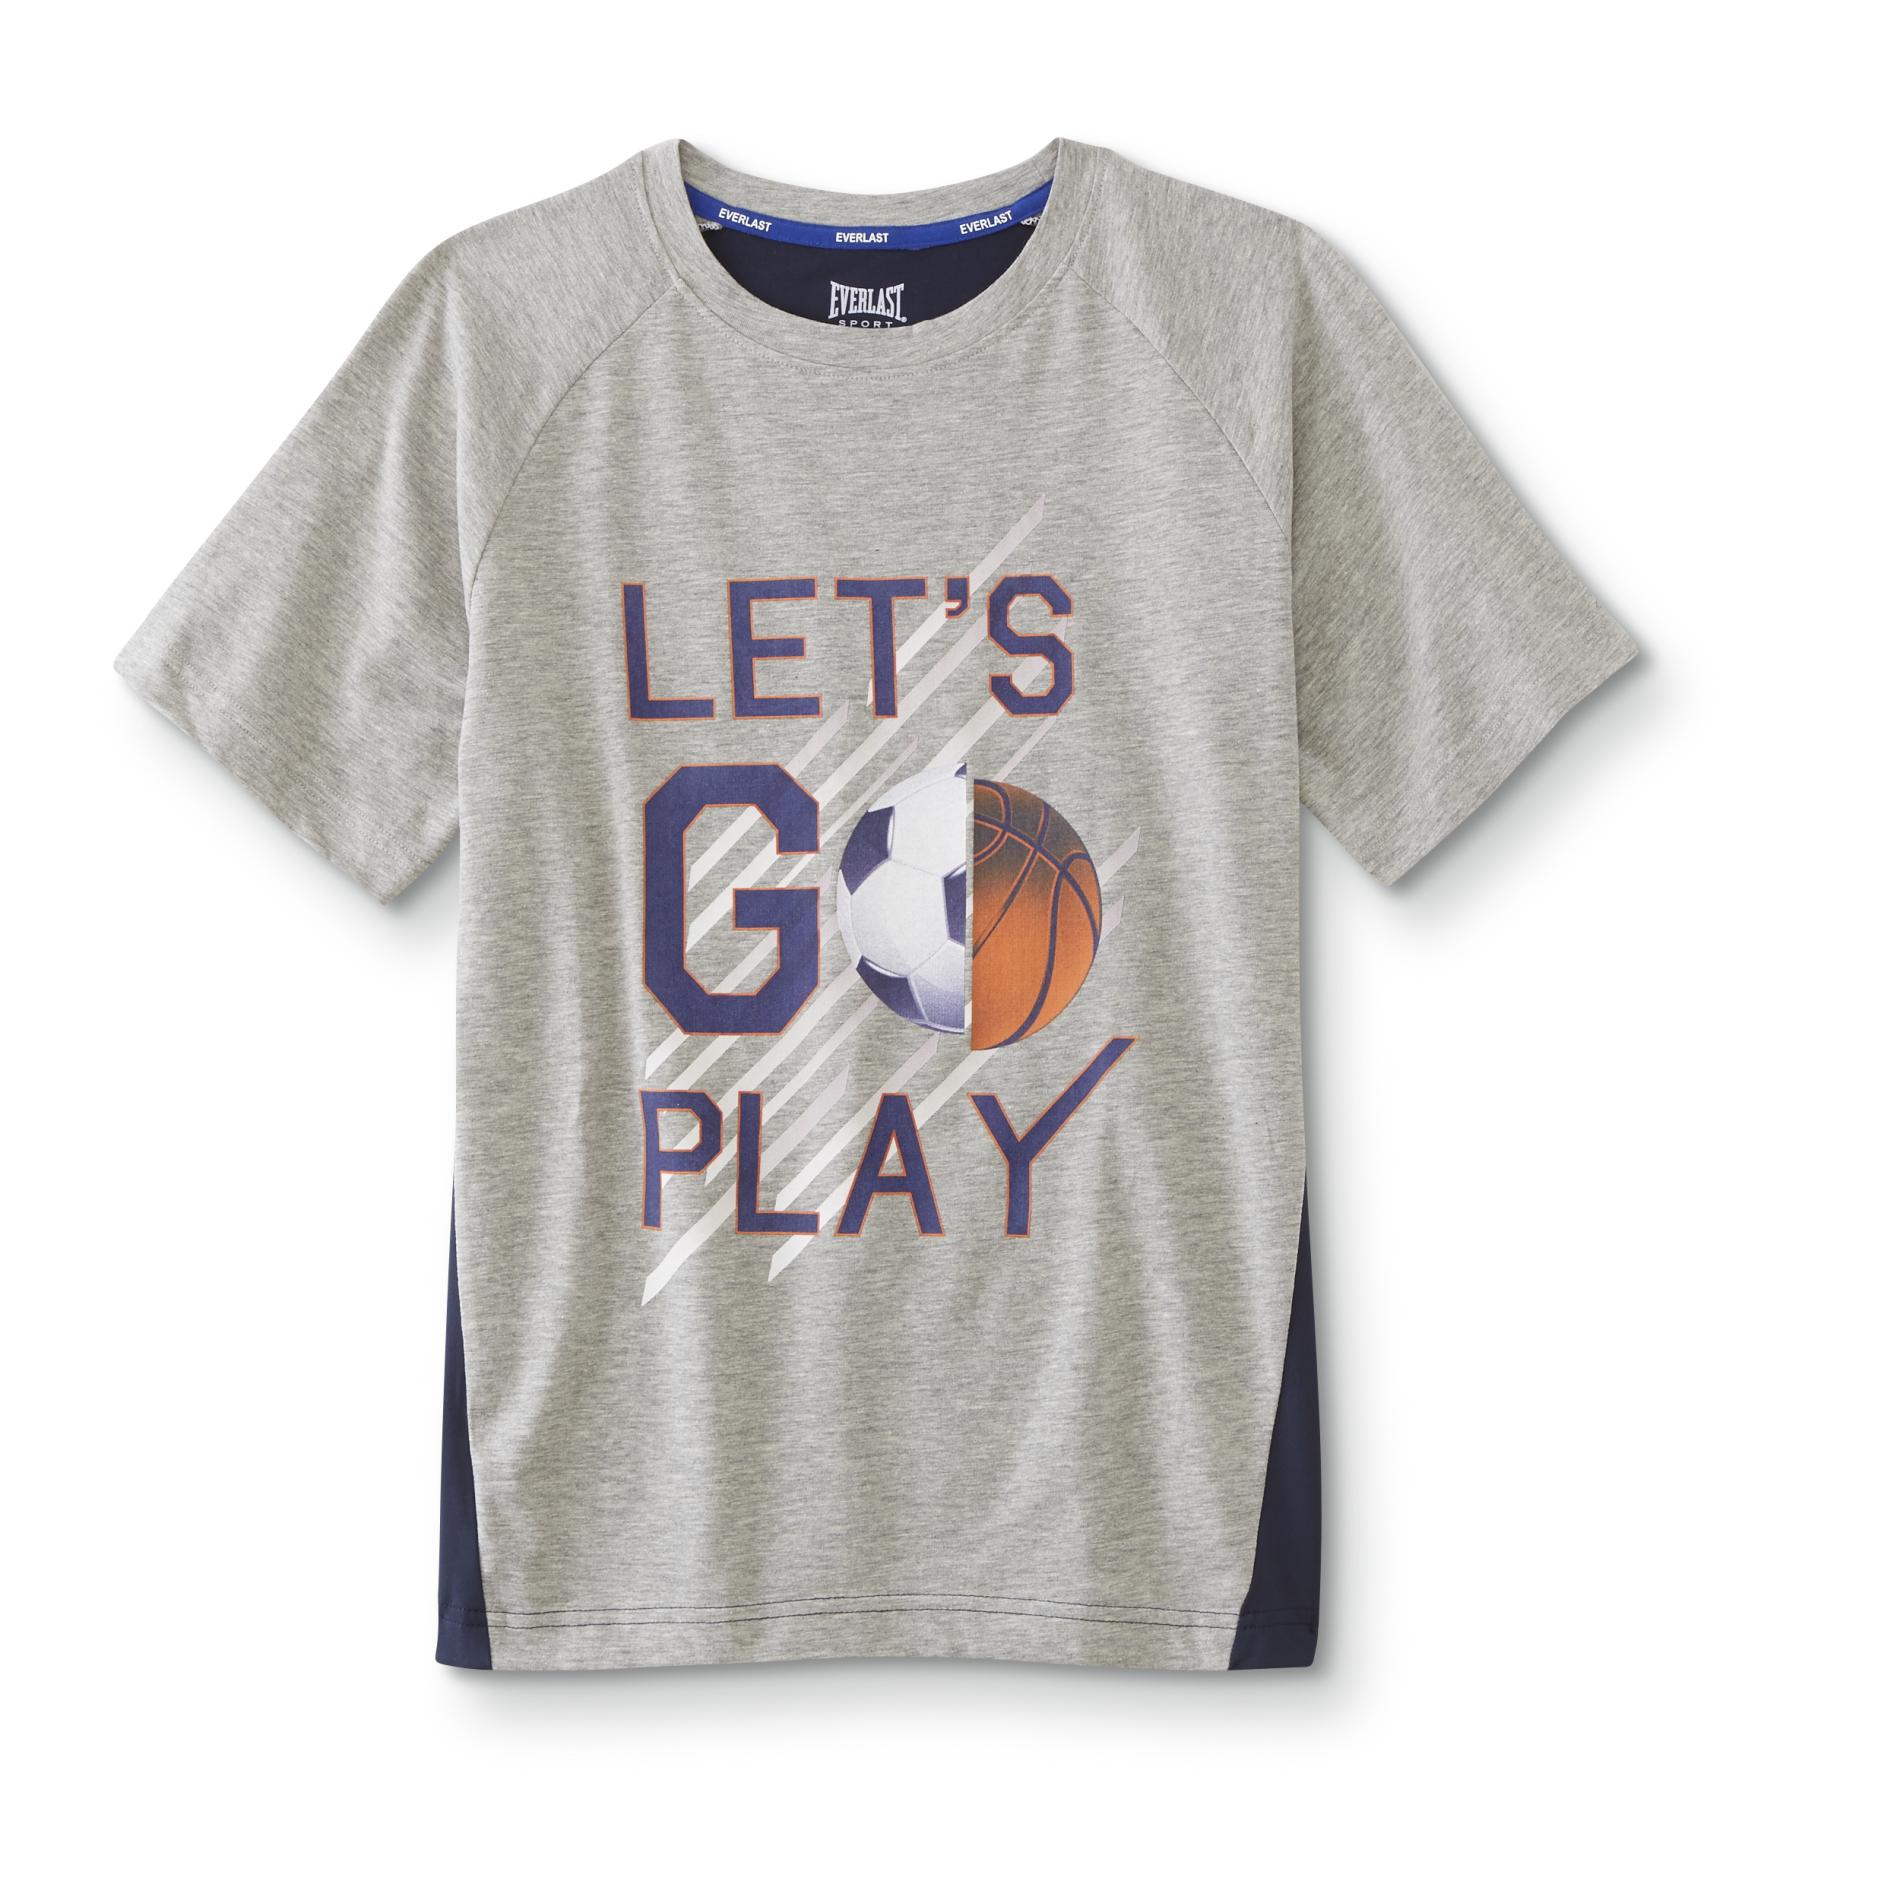 Everlast&reg; Sport Boys' Athletic T-Shirt - Let's Go Play